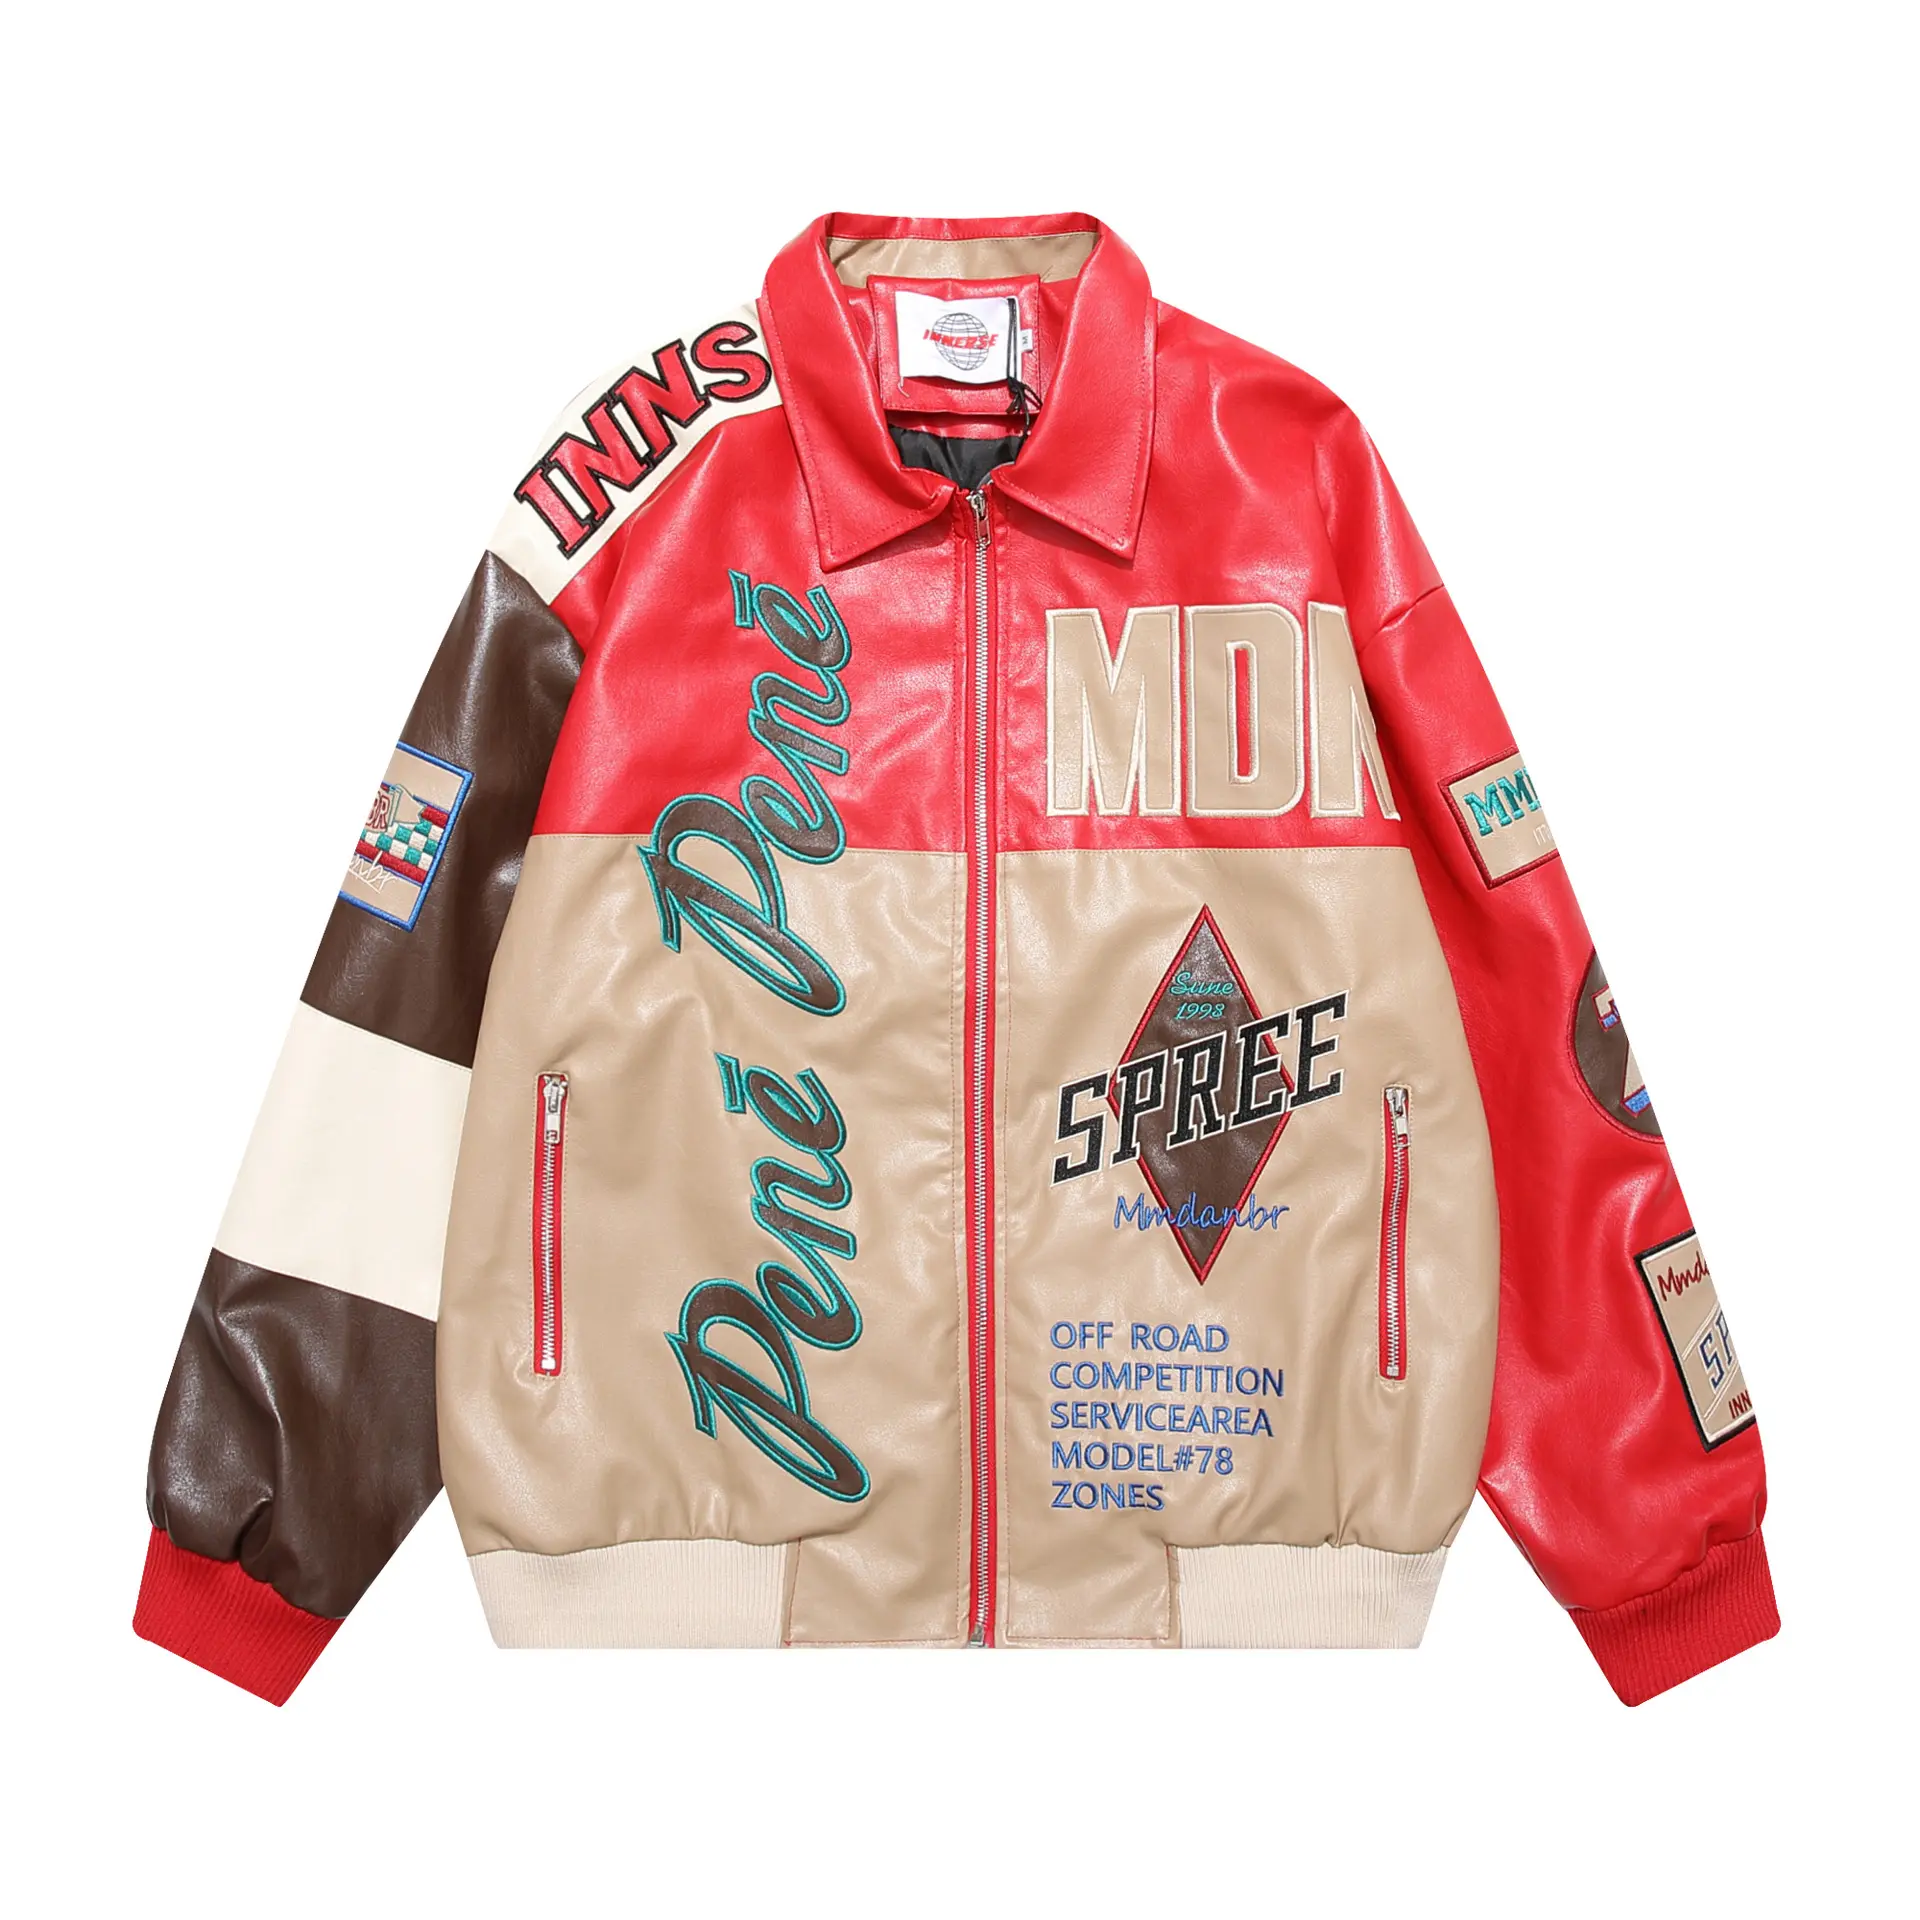 LULUSEN Branded Streetwear Colorful Vintage Leather Jacket Bike Racing PU Leather Jackets Unisex